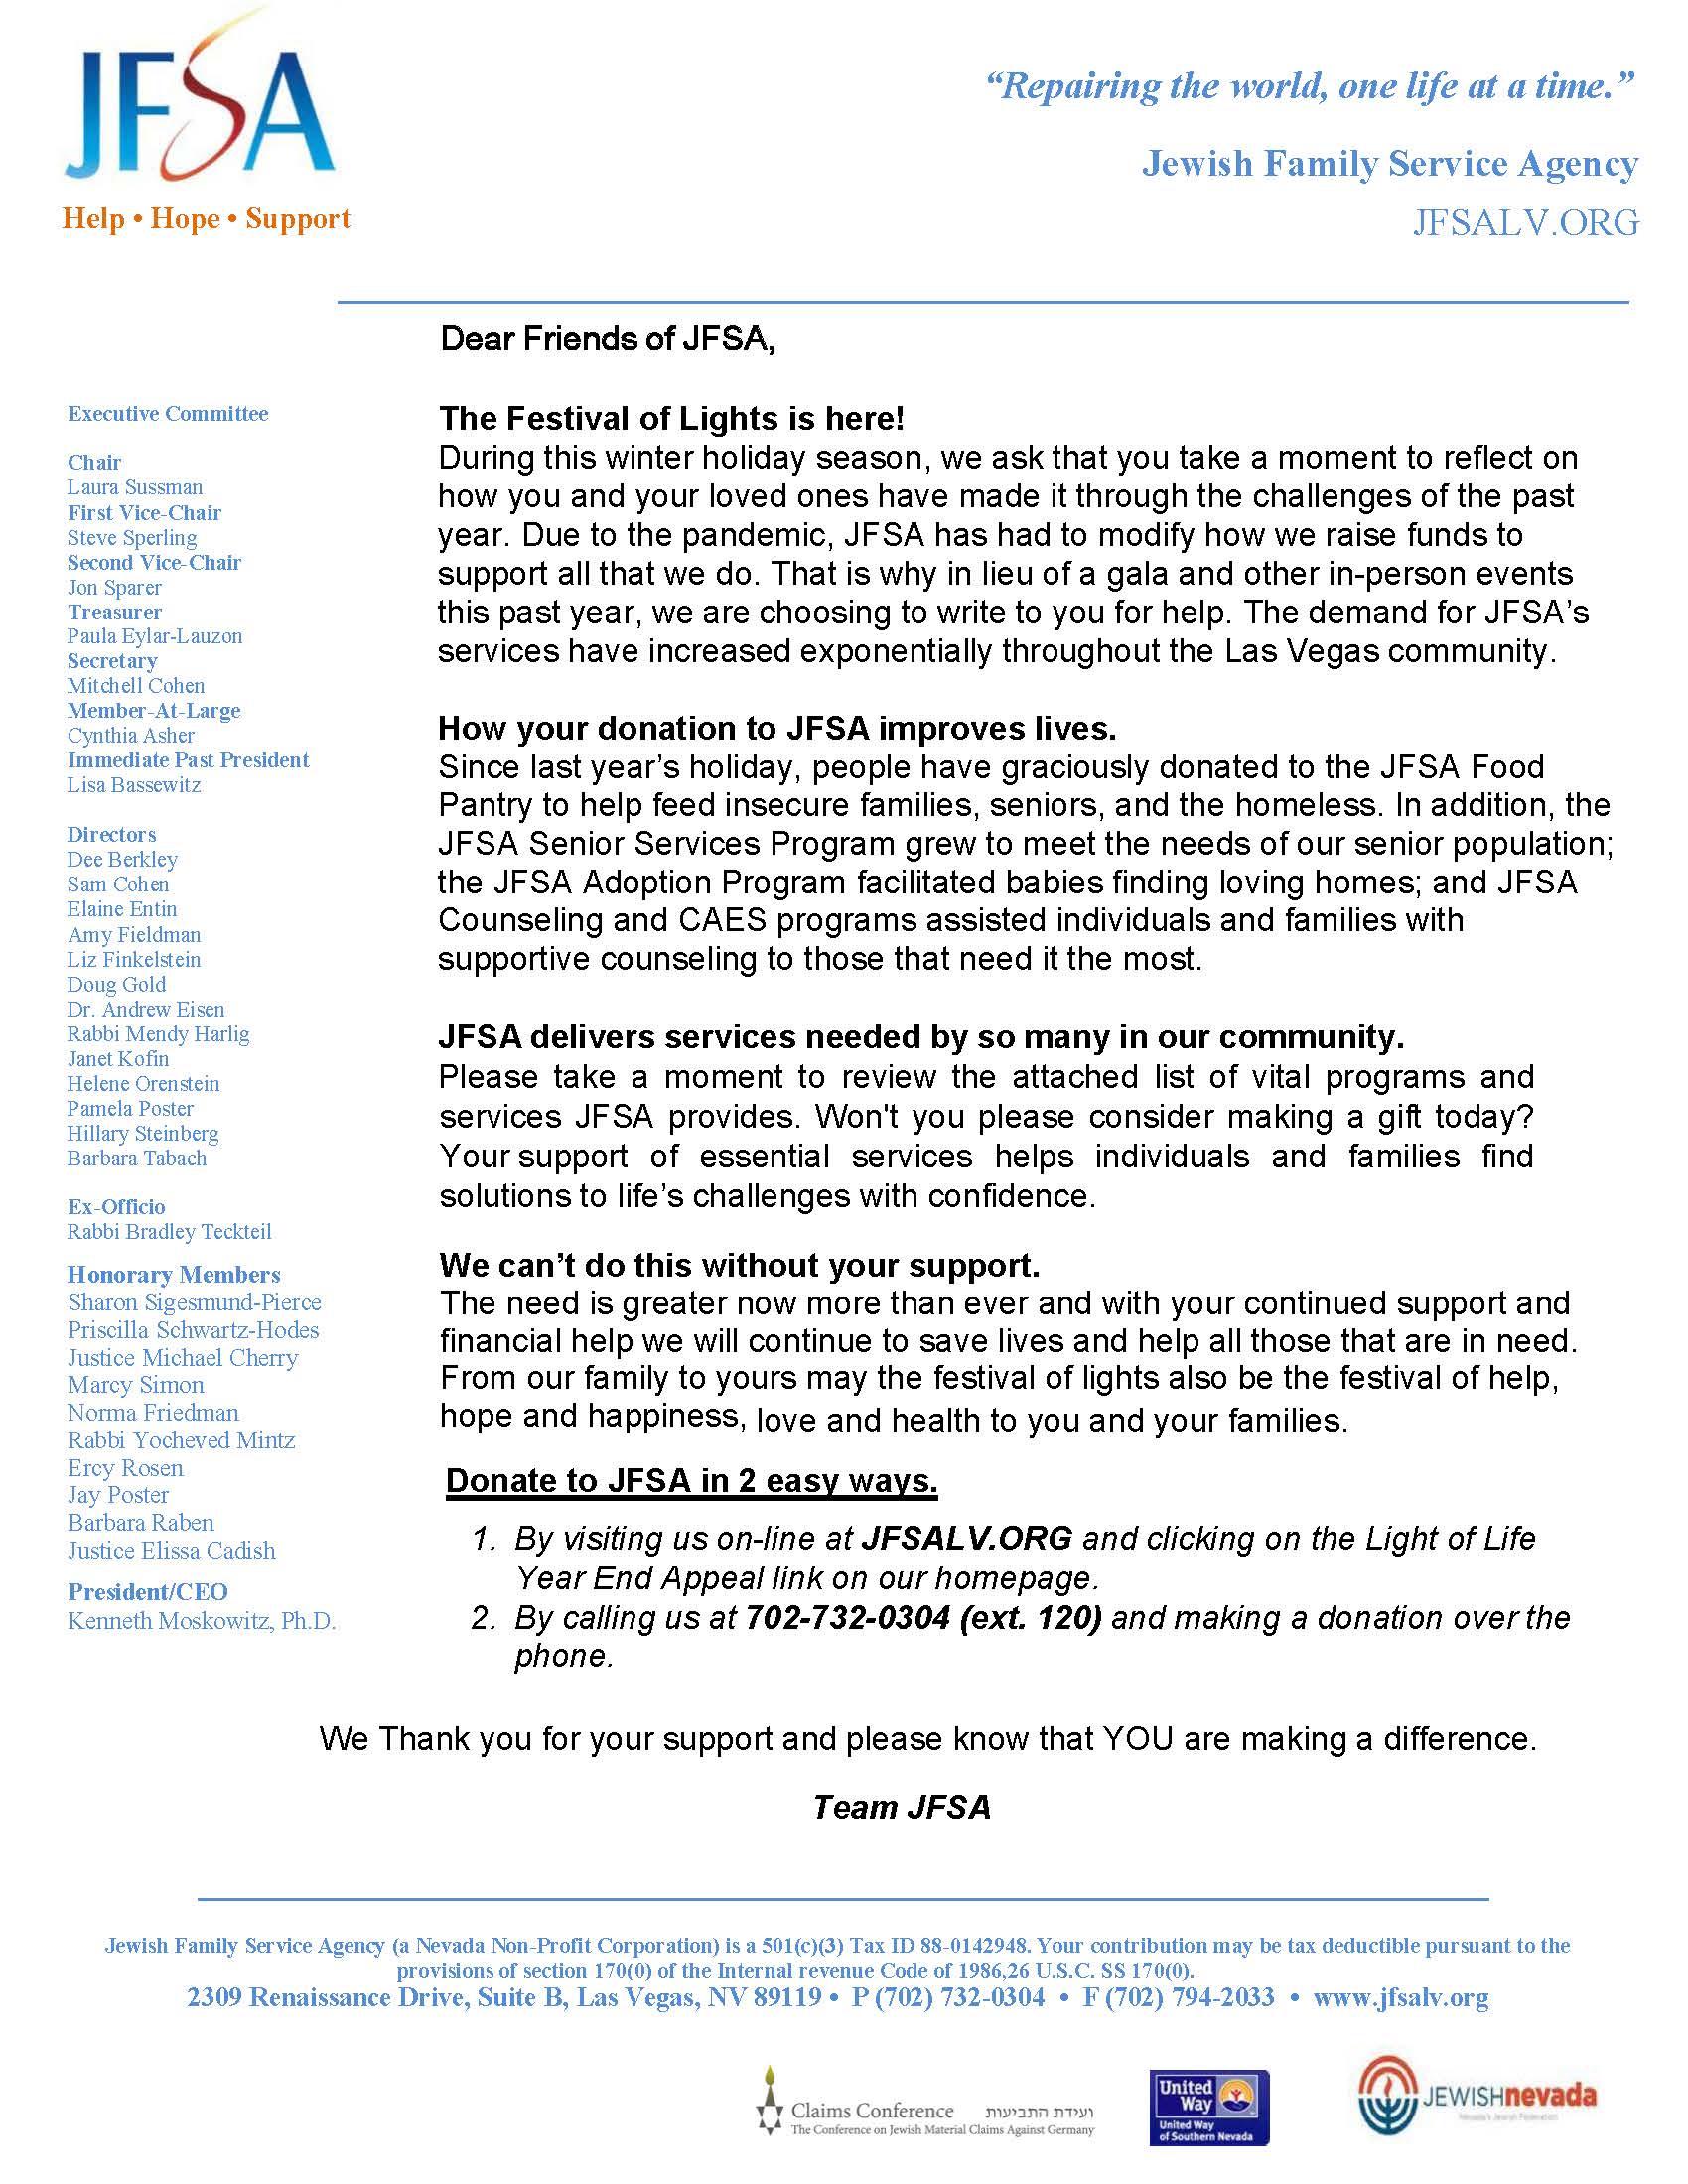 JFSA 2021 Year End Donation Letter